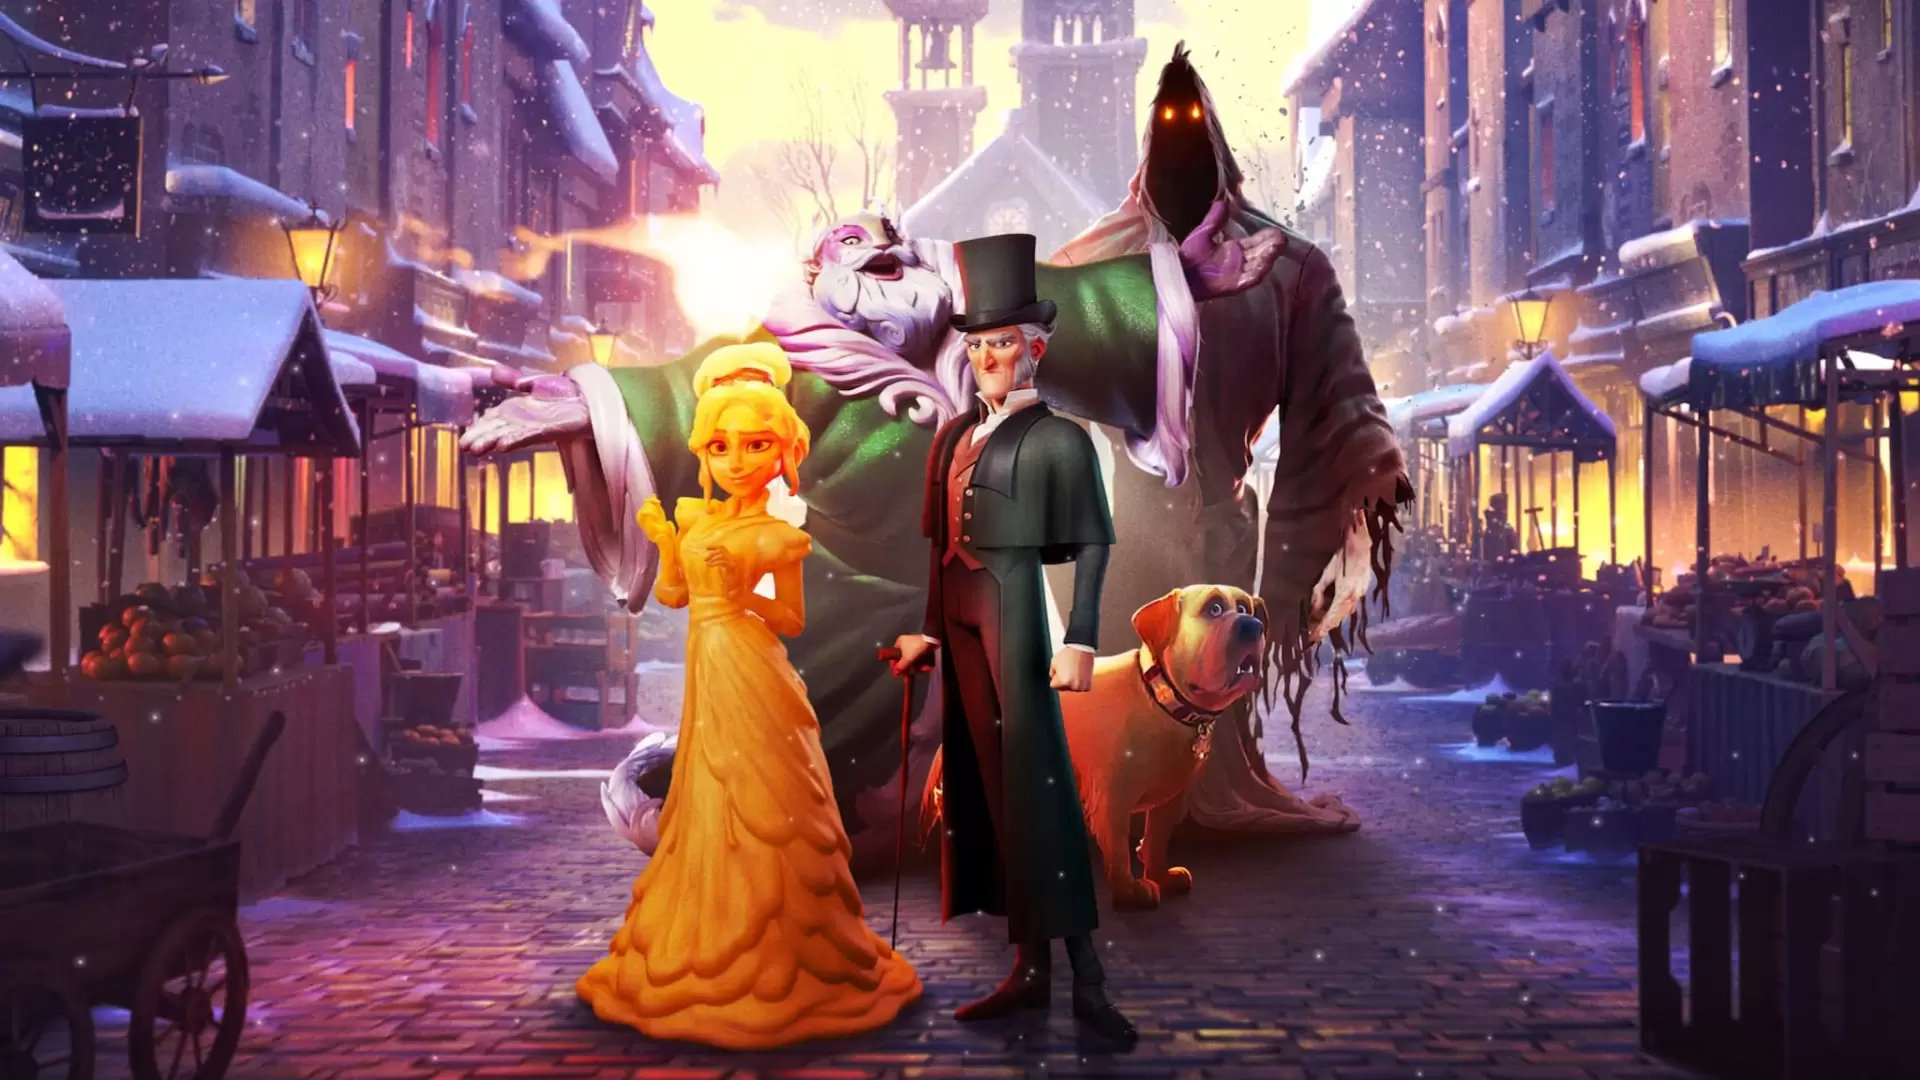 دانلود انیمیشن Scrooge: A Christmas Carol 2022 (اسکروج: سرود کریسمس) با زیرنویس فارسی و تماشای آنلاین